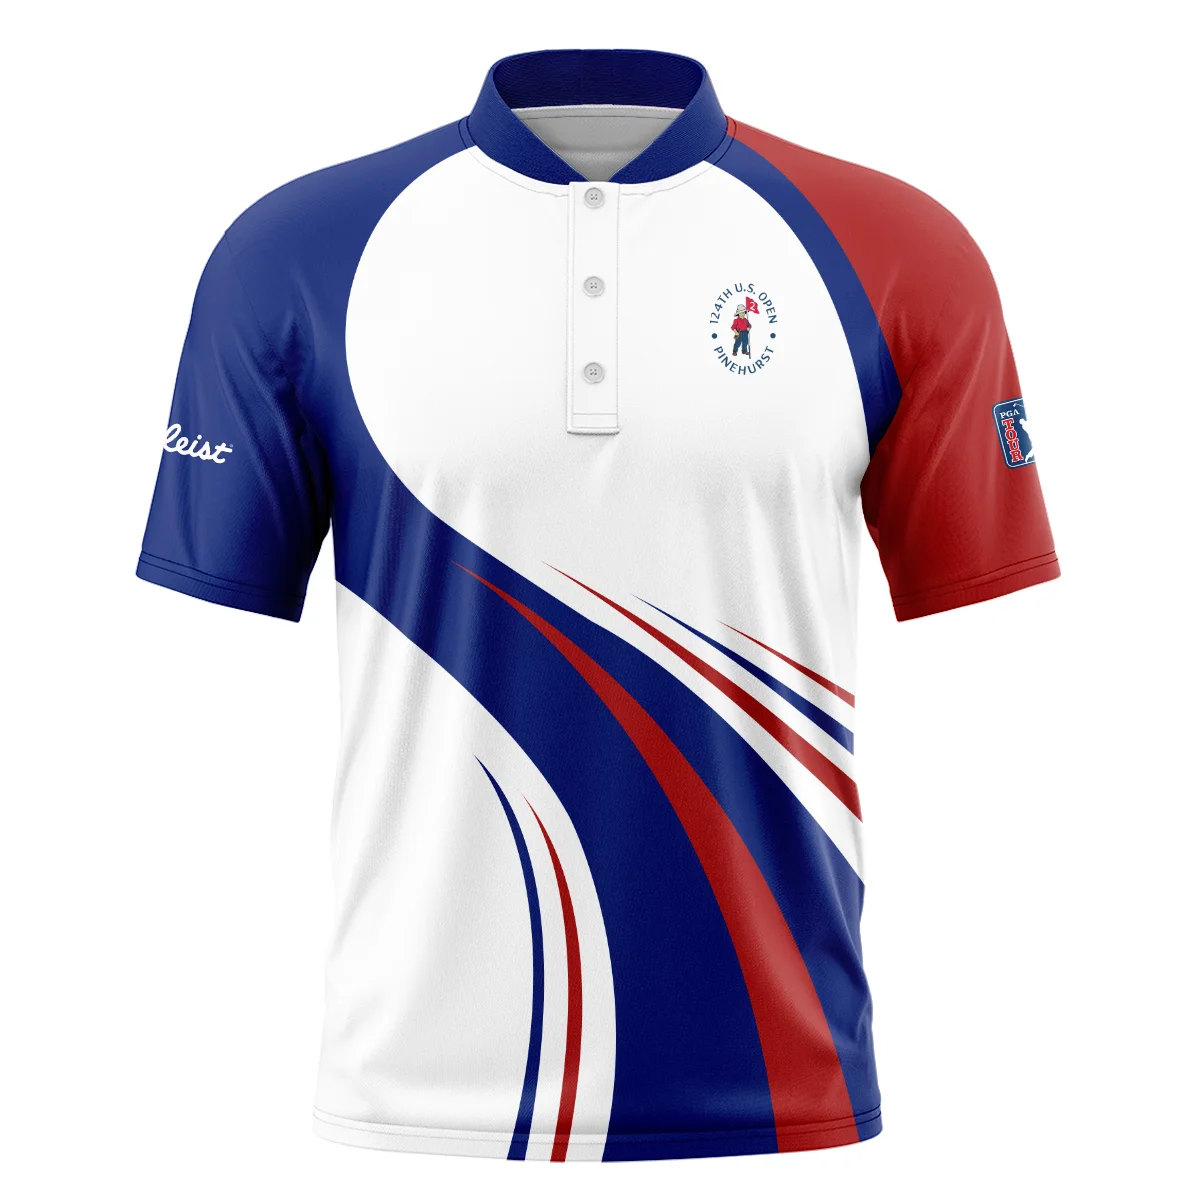 Titleist 124th U.S. Open Pinehurst Golf Blue Red White Background Zipper Polo Shirt Style Classic Zipper Polo Shirt For Men